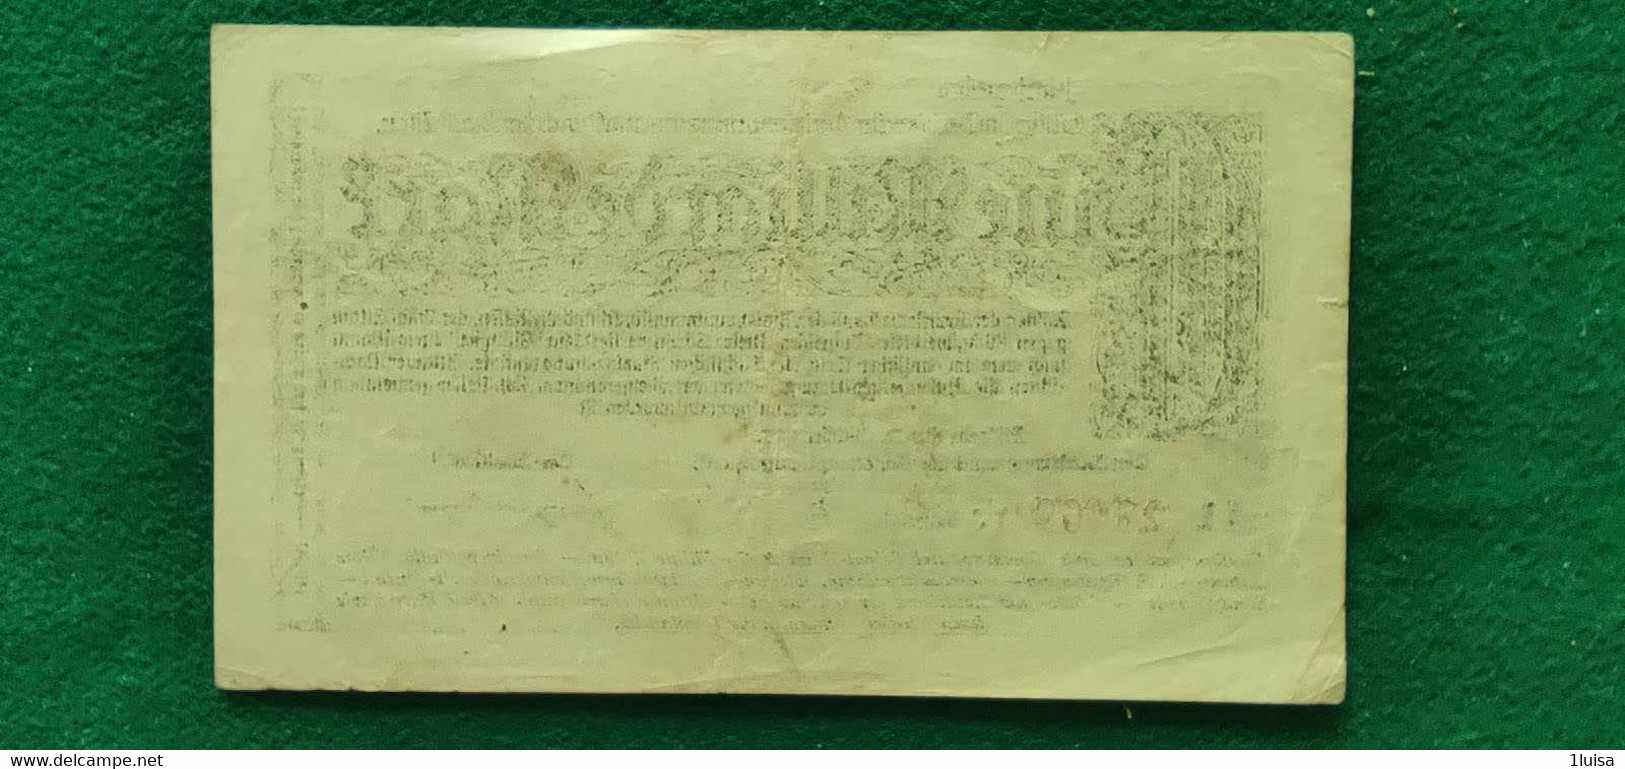 GERMANIA Zittau 1 Miliardo MARK 1923 - Kiloware - Banknoten